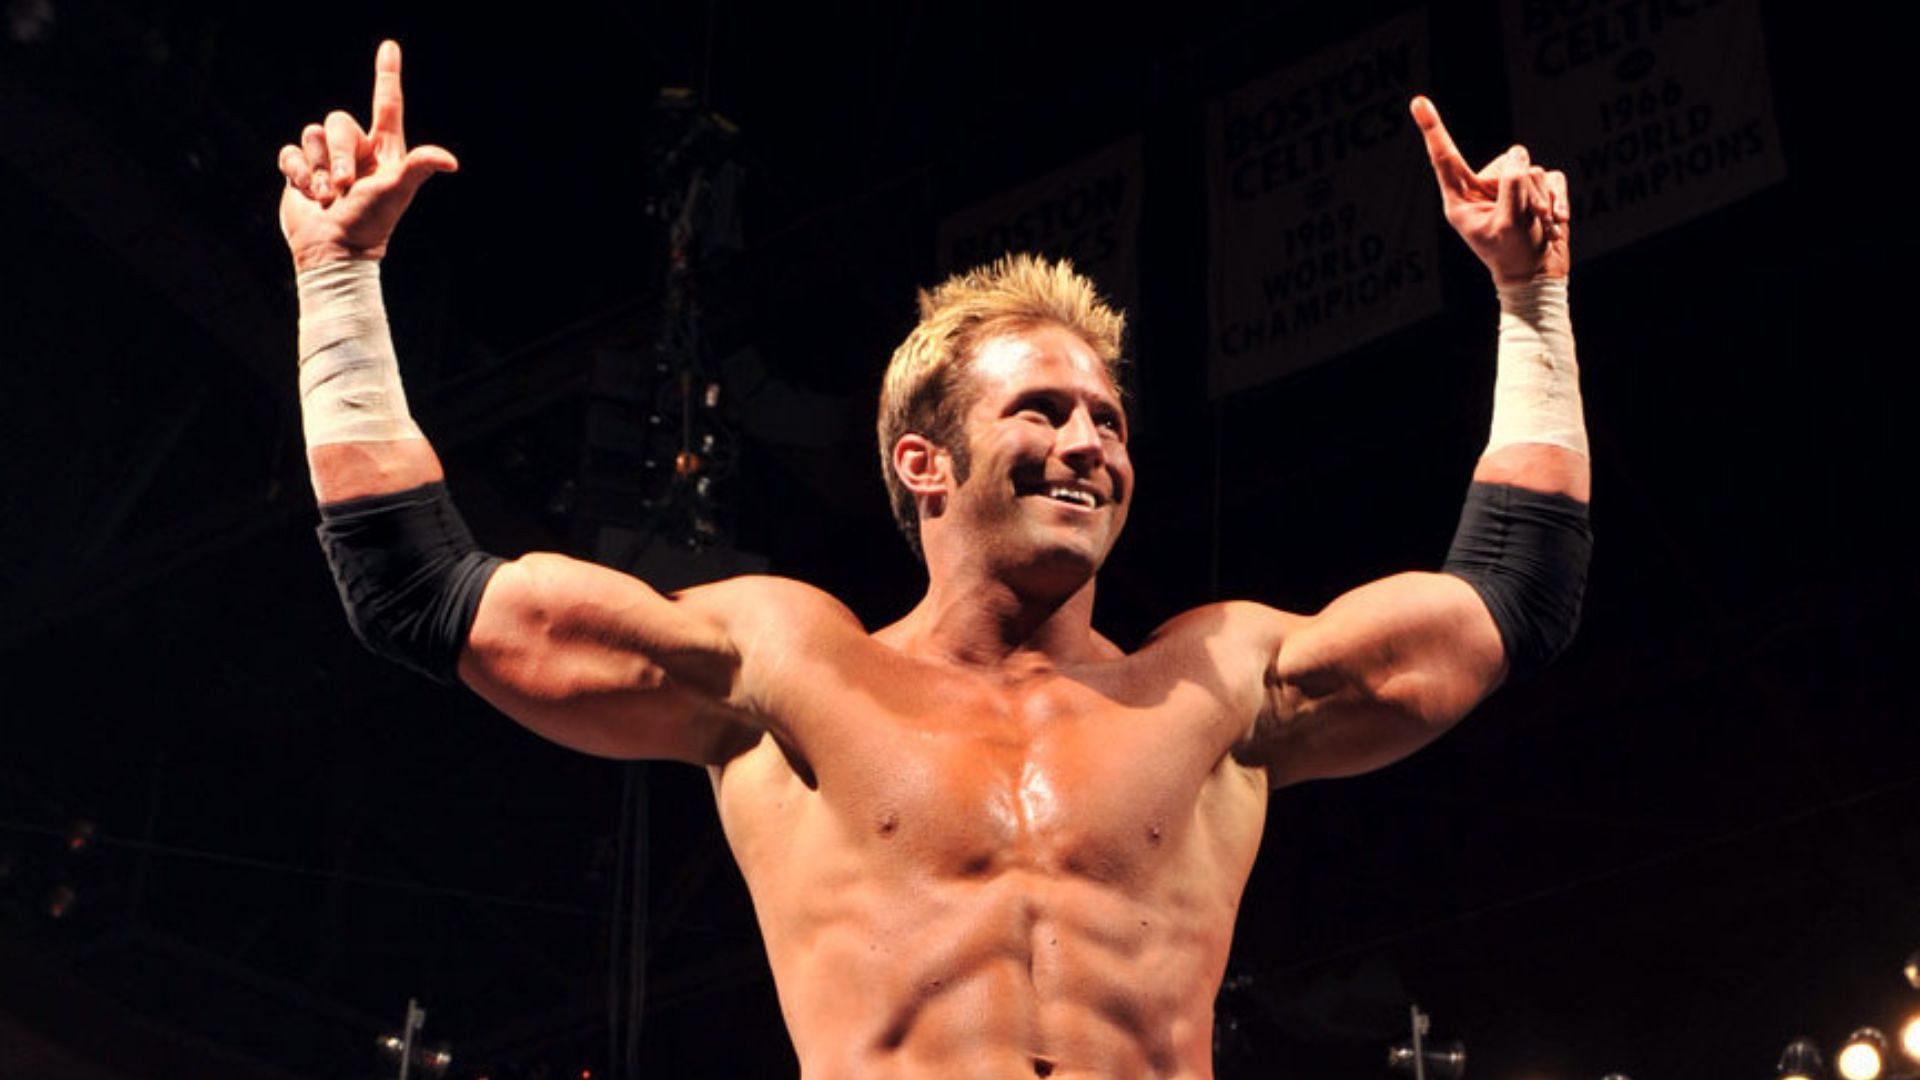 Zack Ryder is a former under-utilized WWE talent